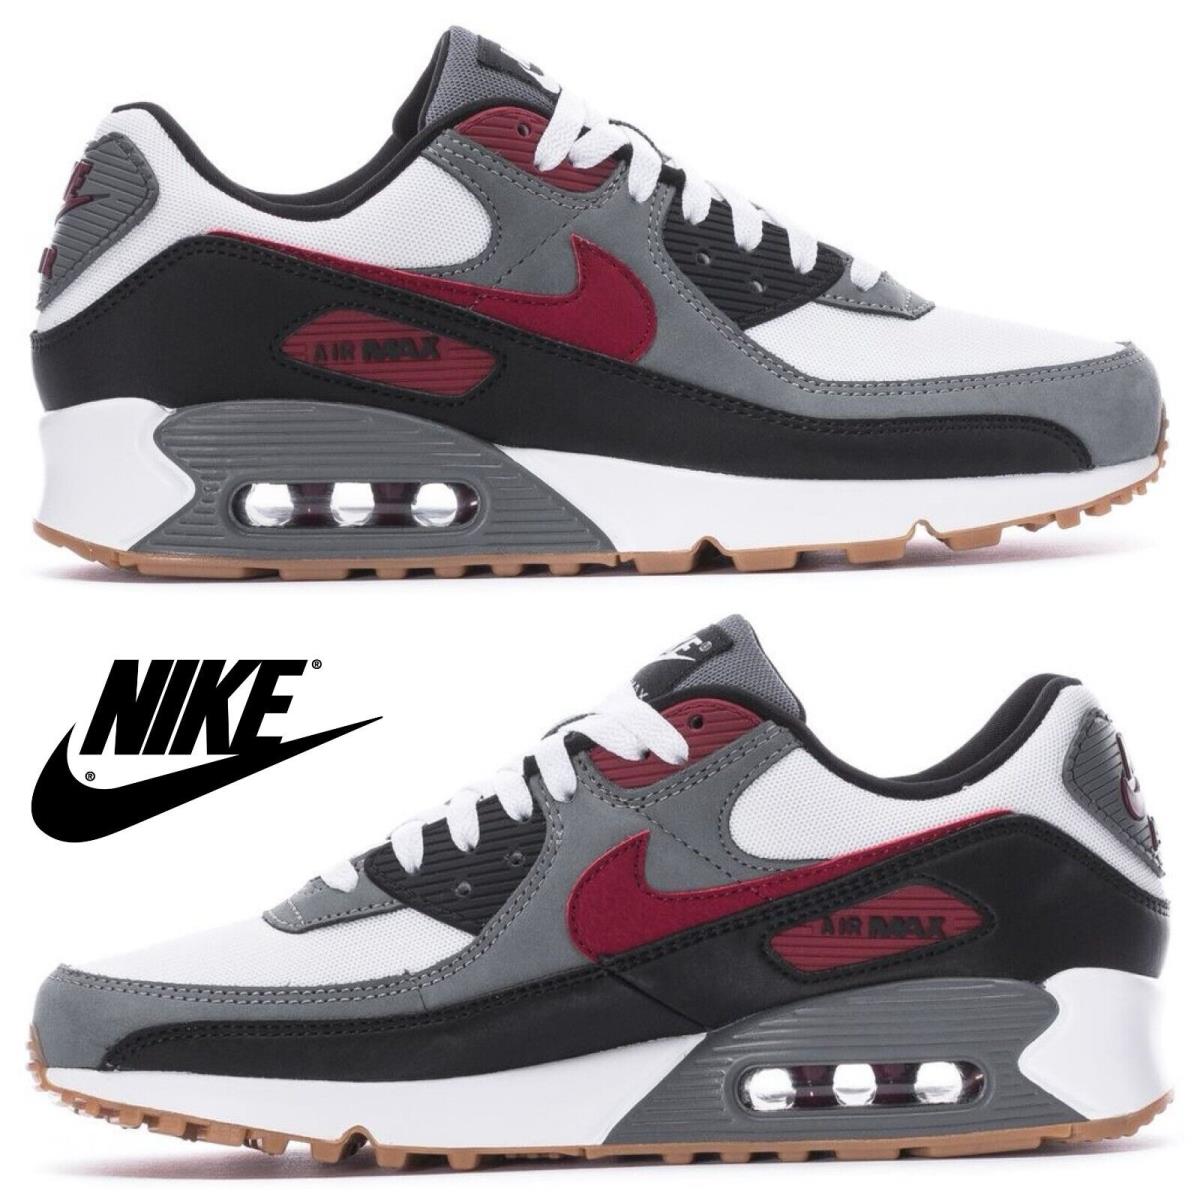 Nike Air Max 90 Men`s Sneakers Comfort Casual Sport Shoes Gum Run Gray Black - Gray, Manufacturer: White/Team Red/Cool Grey/Gum